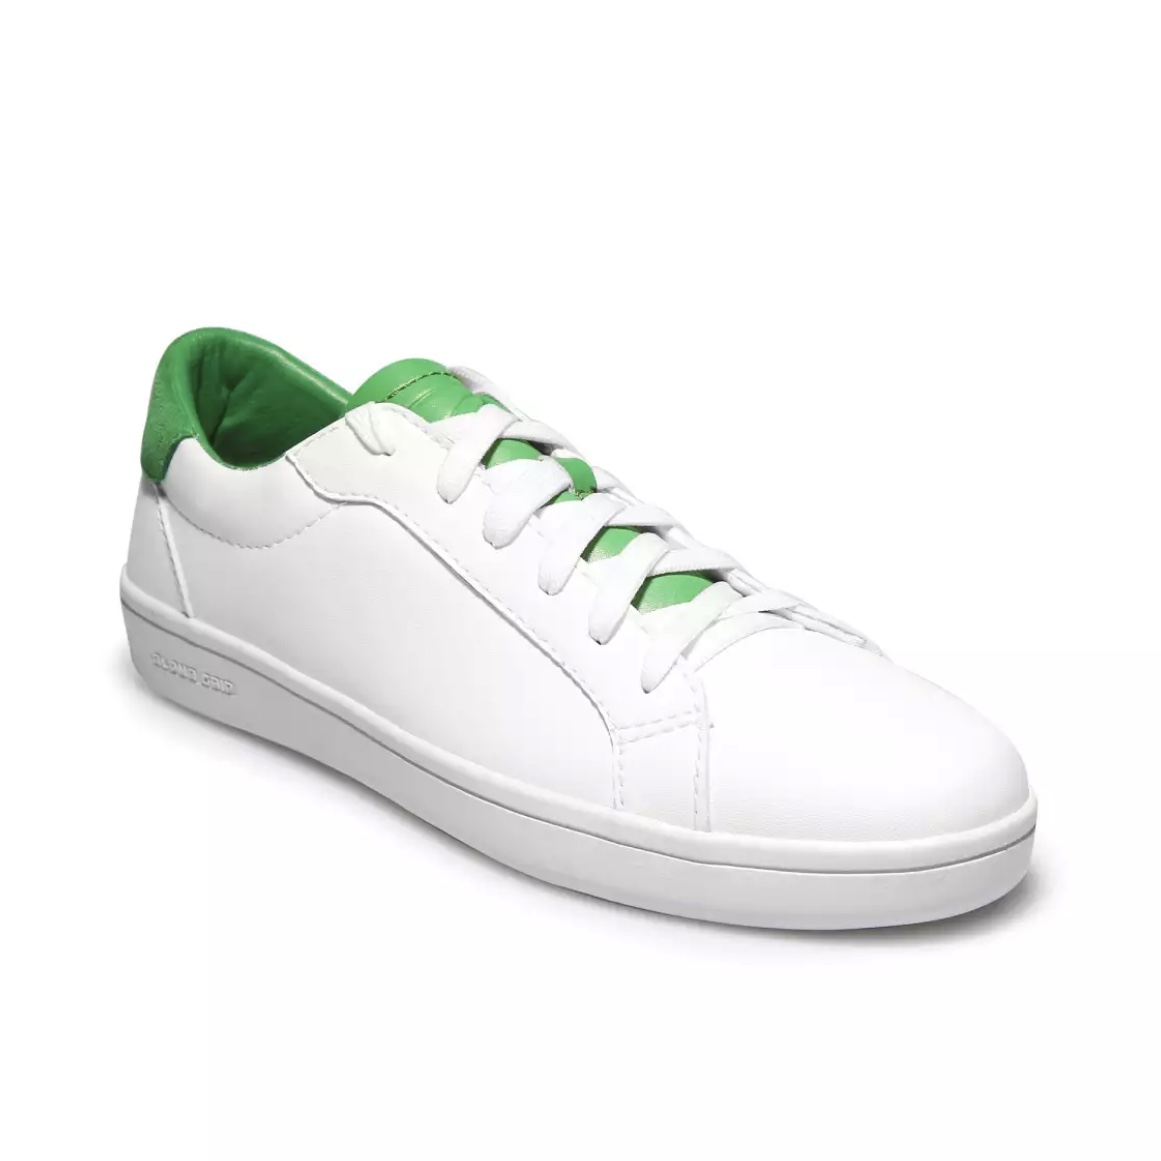 world balance shoes green